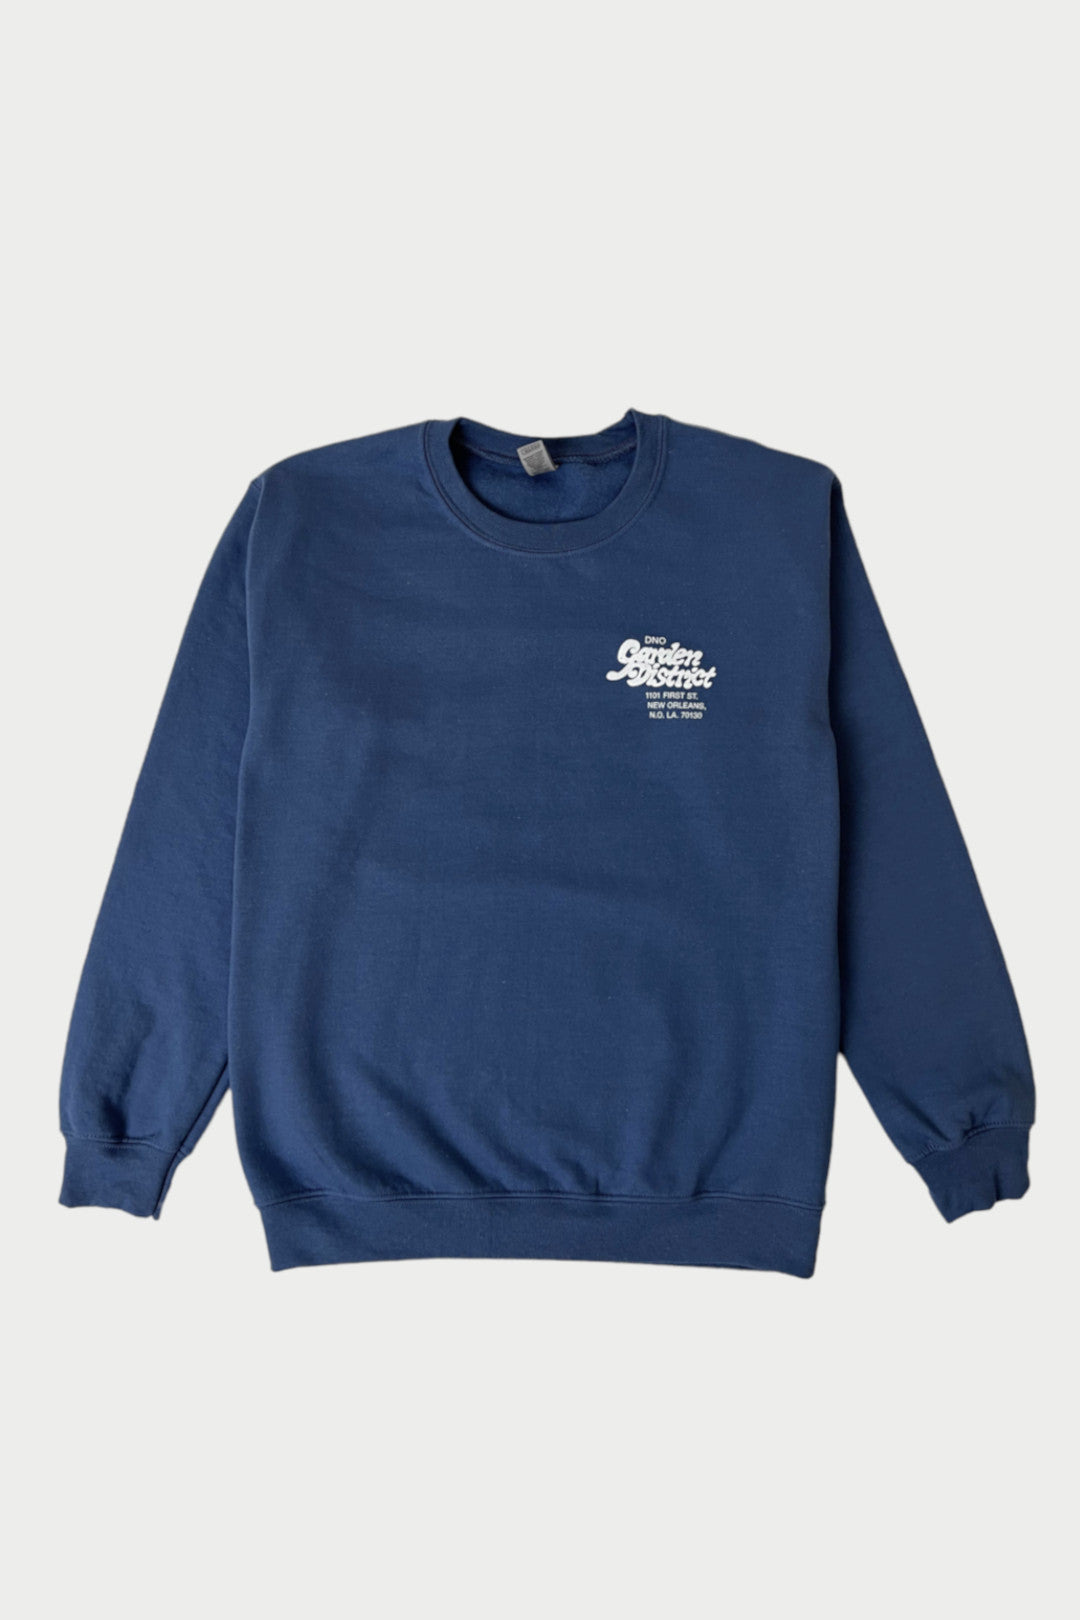 GD Shop Sweatshirt – Indigo